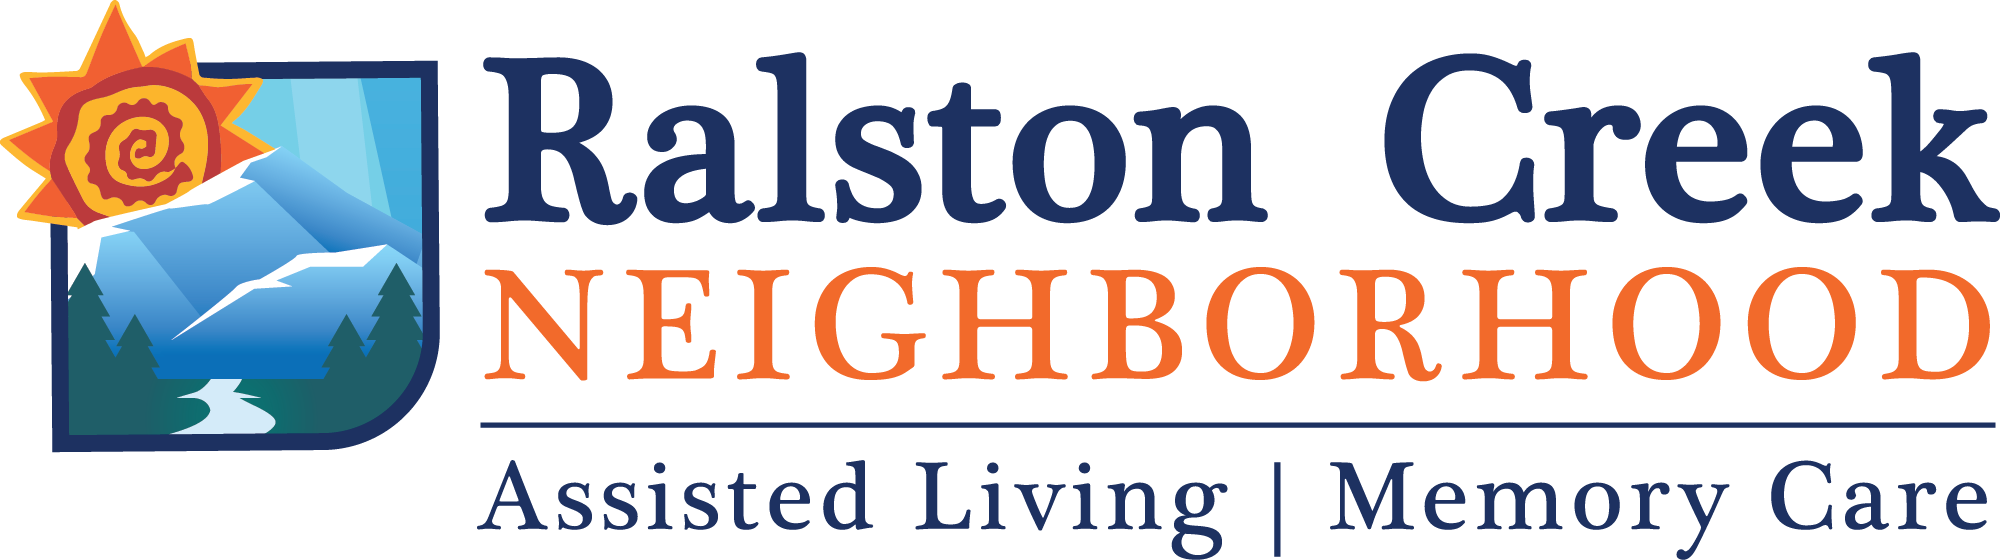 Ralston Creek Neighborhood Assisted Living & Memory Care